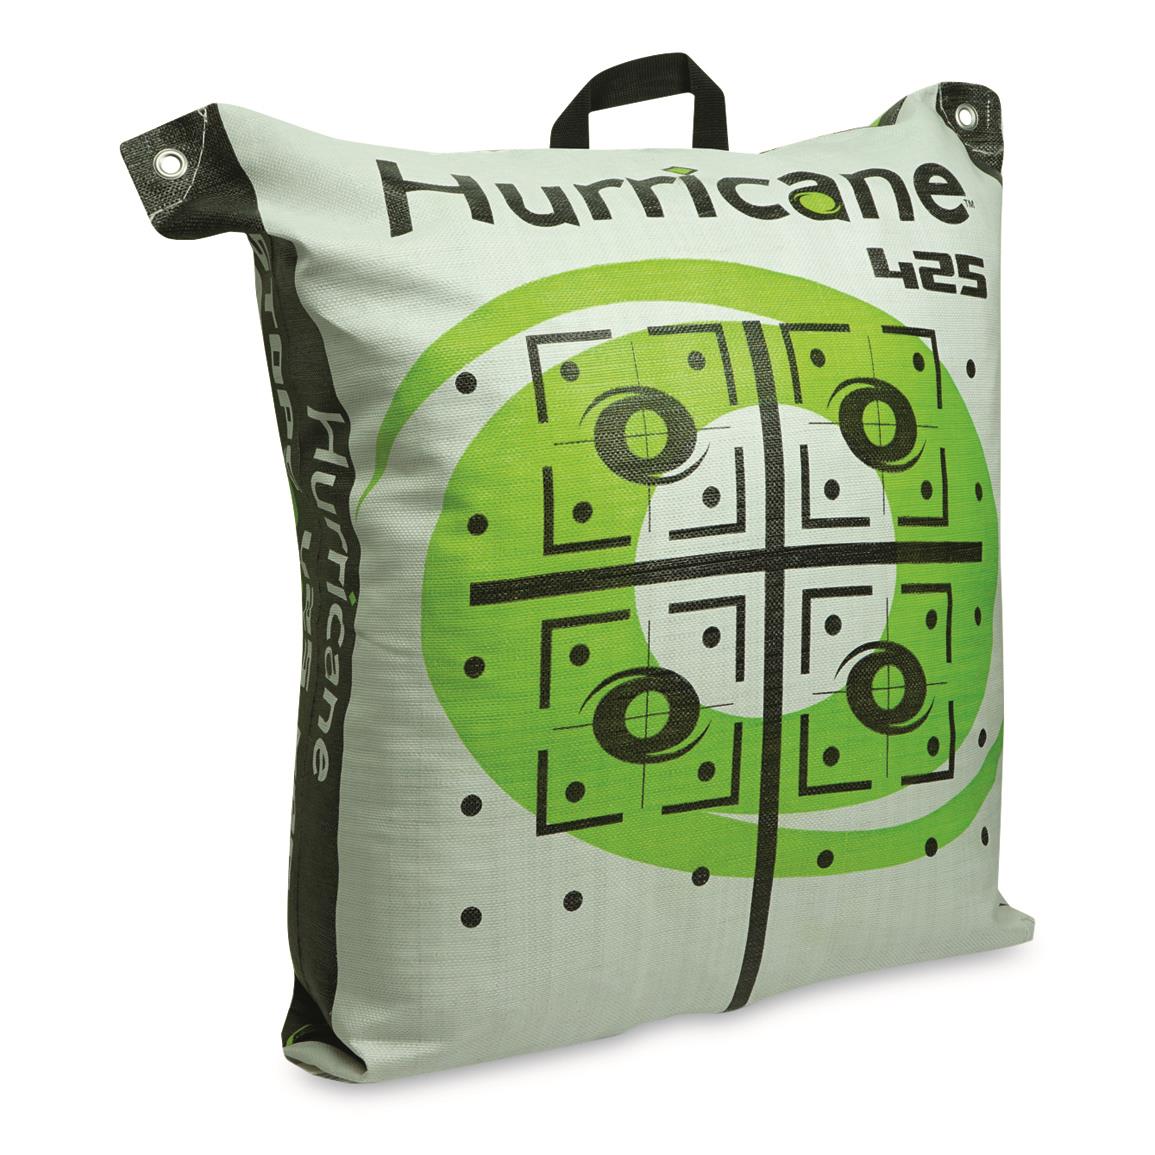 Hurricane H25 Target Bag